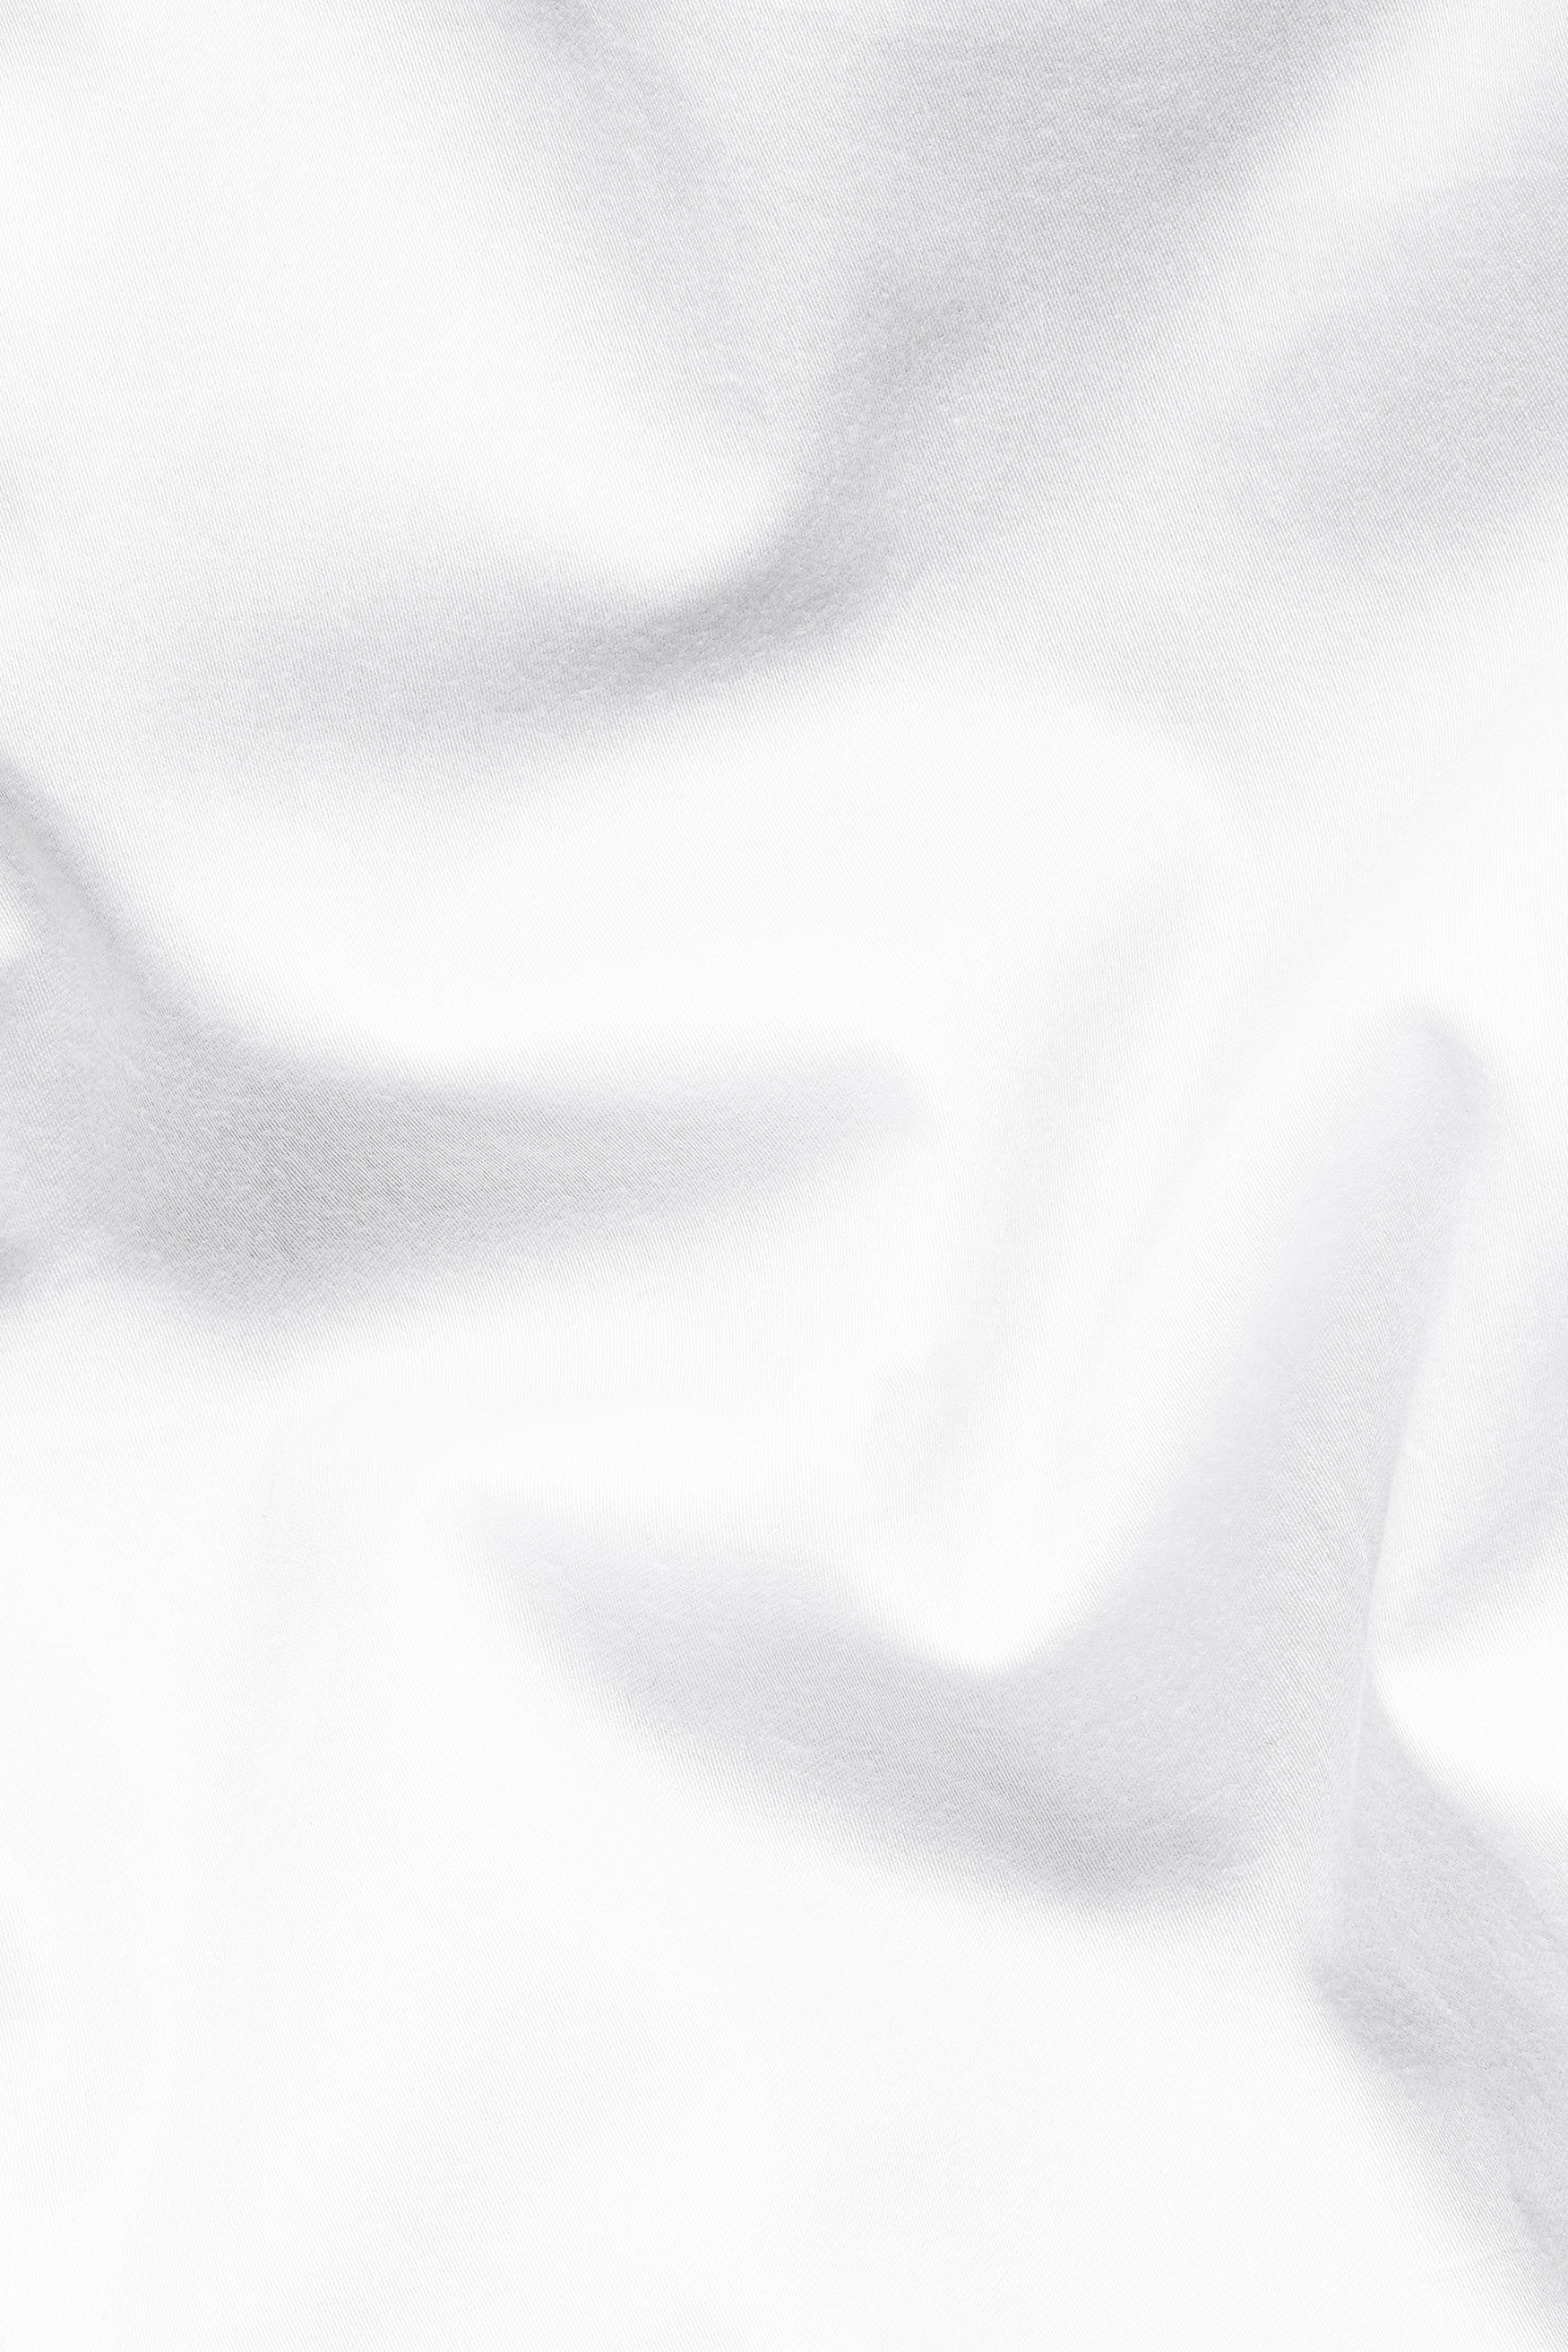 Bright White Romantic Wolf Hand painted effect Printed Subtle Sheen Super Soft Premium Cotton Designer Shirt